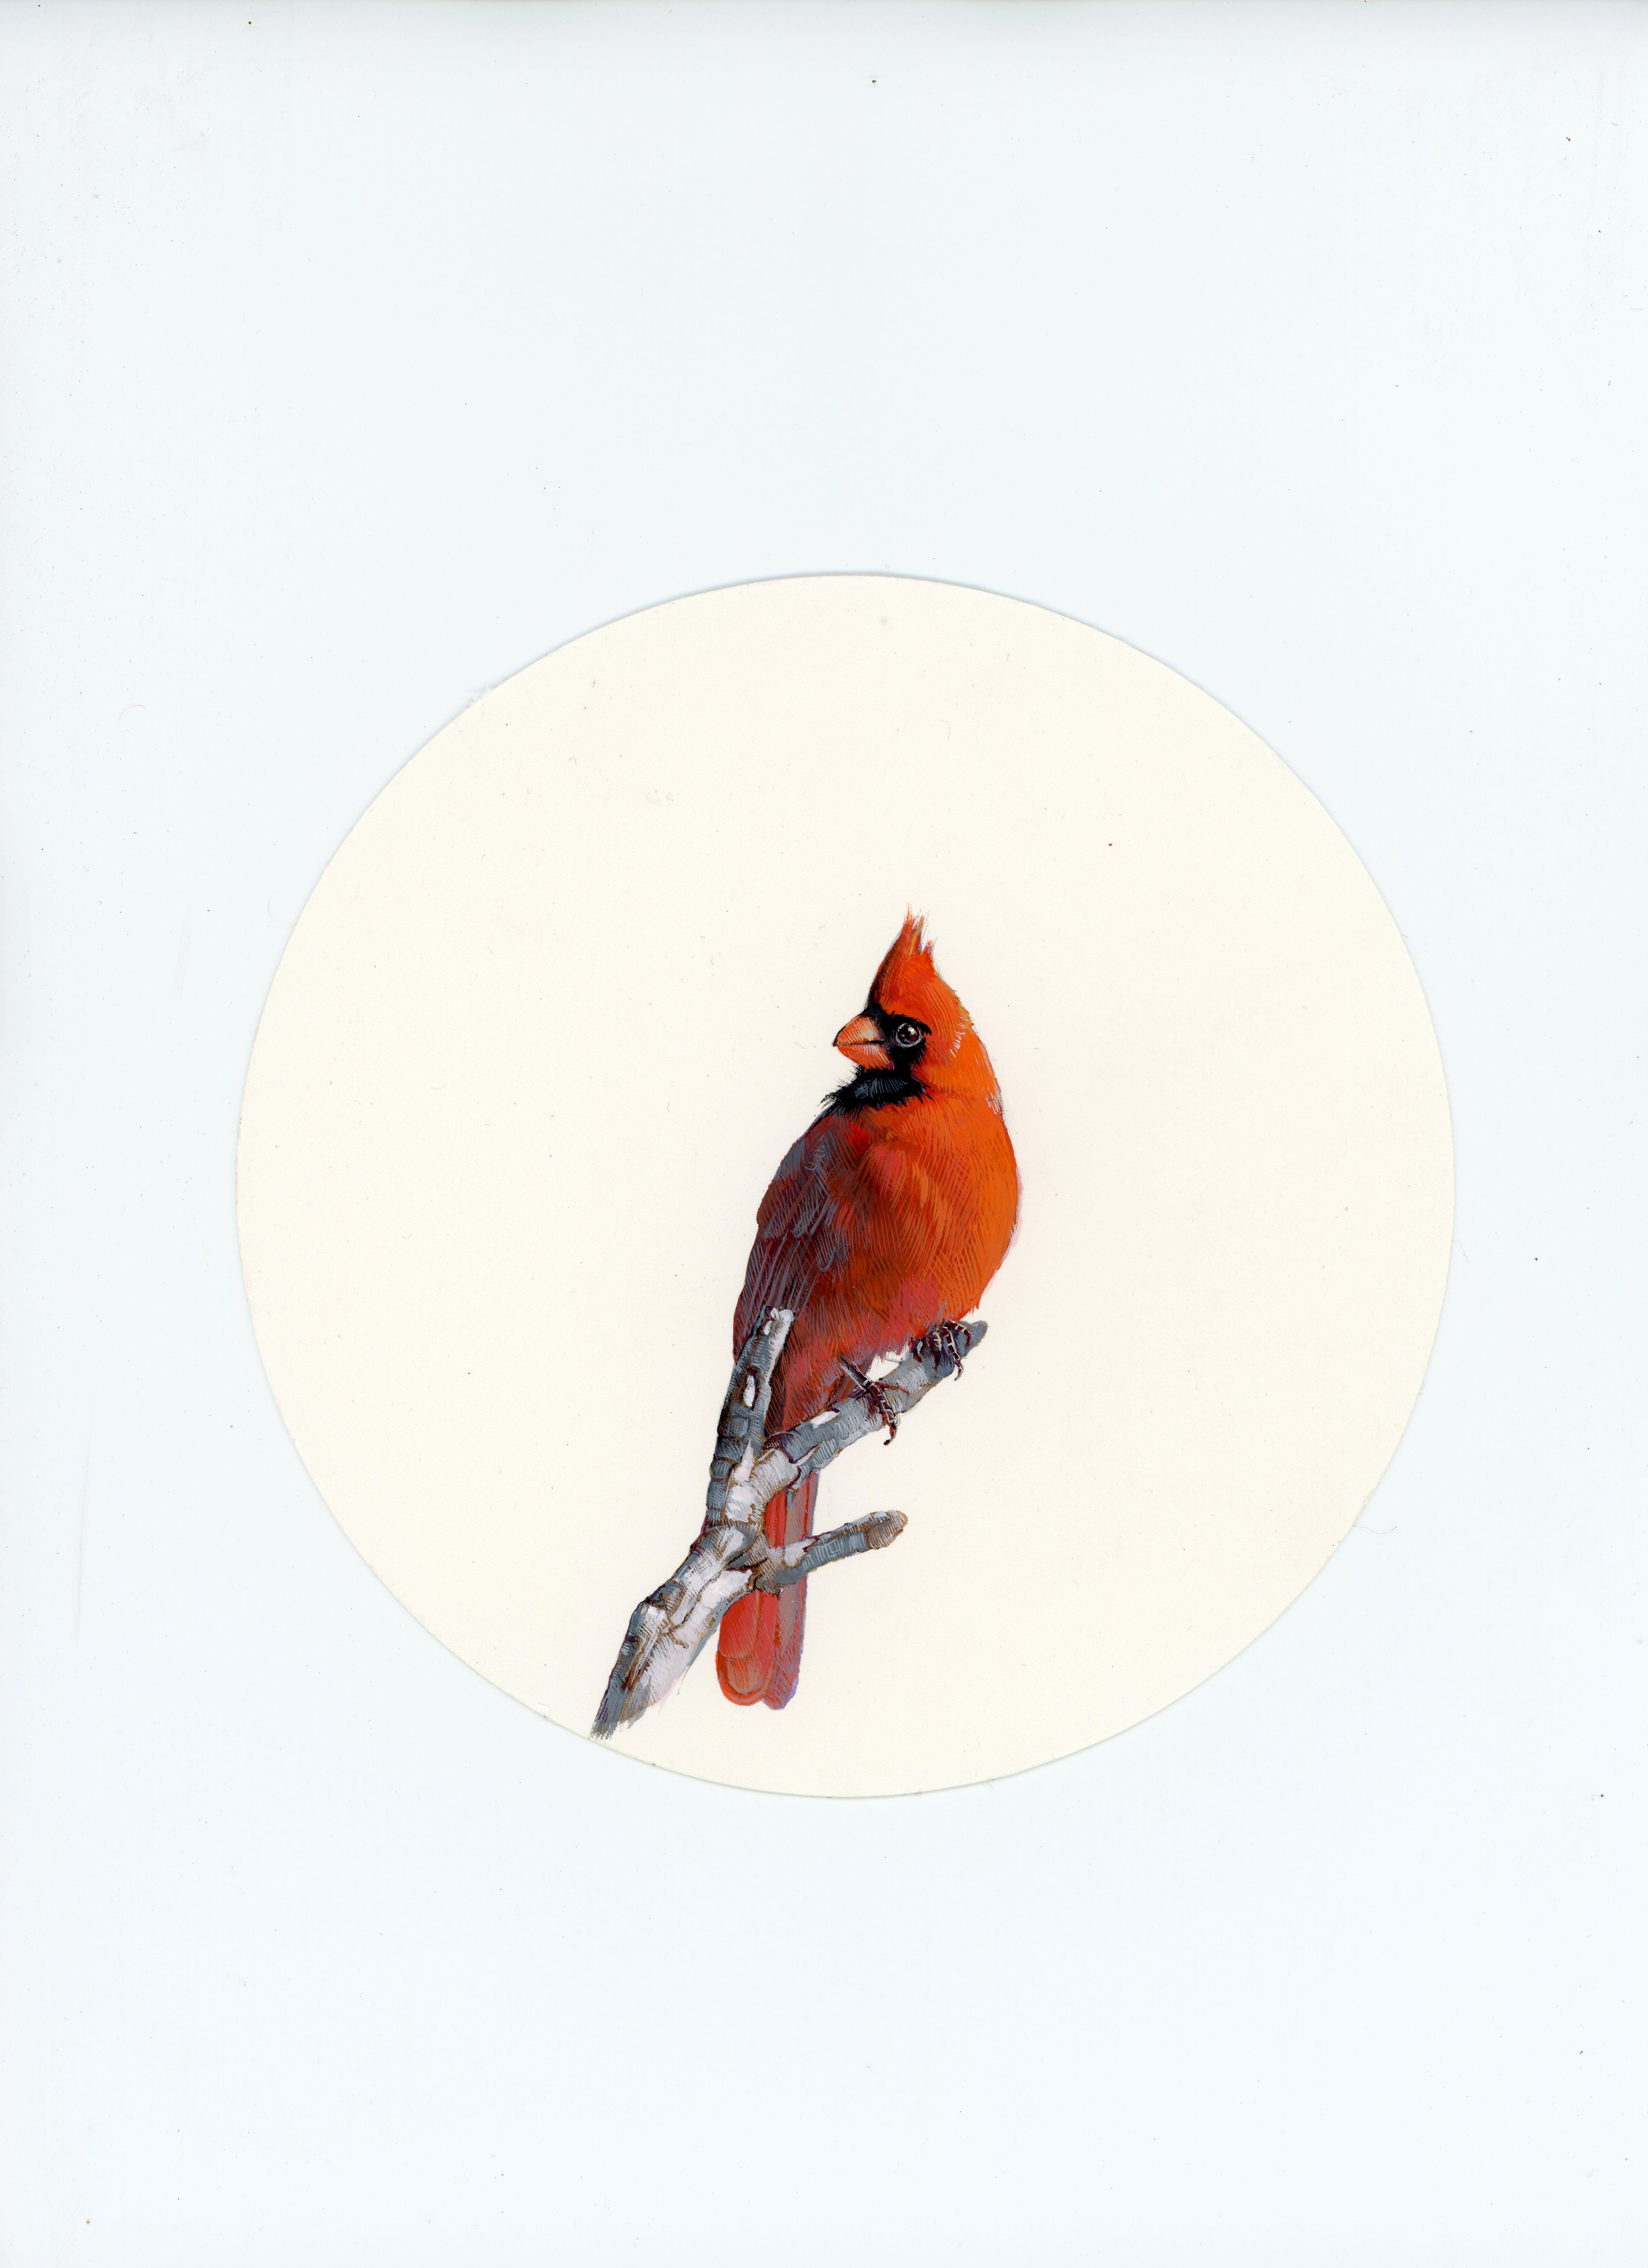 Dina Brodsky Animal Painting - Cardinal 1, realist gouache on paper miniature bird portrait